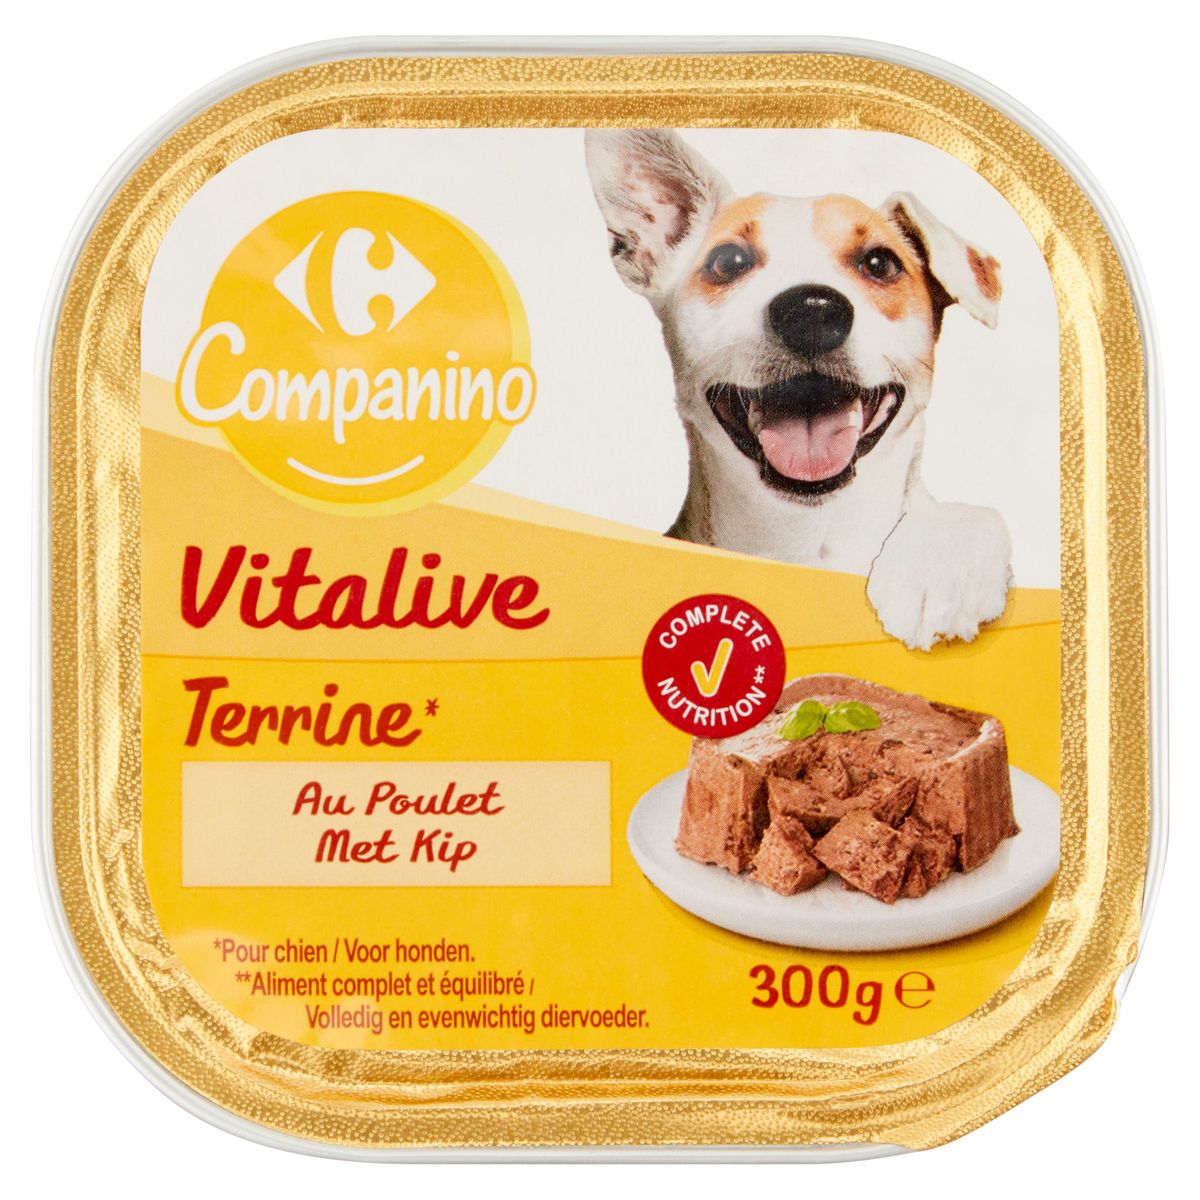 Carrefour Companino Vitalive Terrine au Poulet 300 g